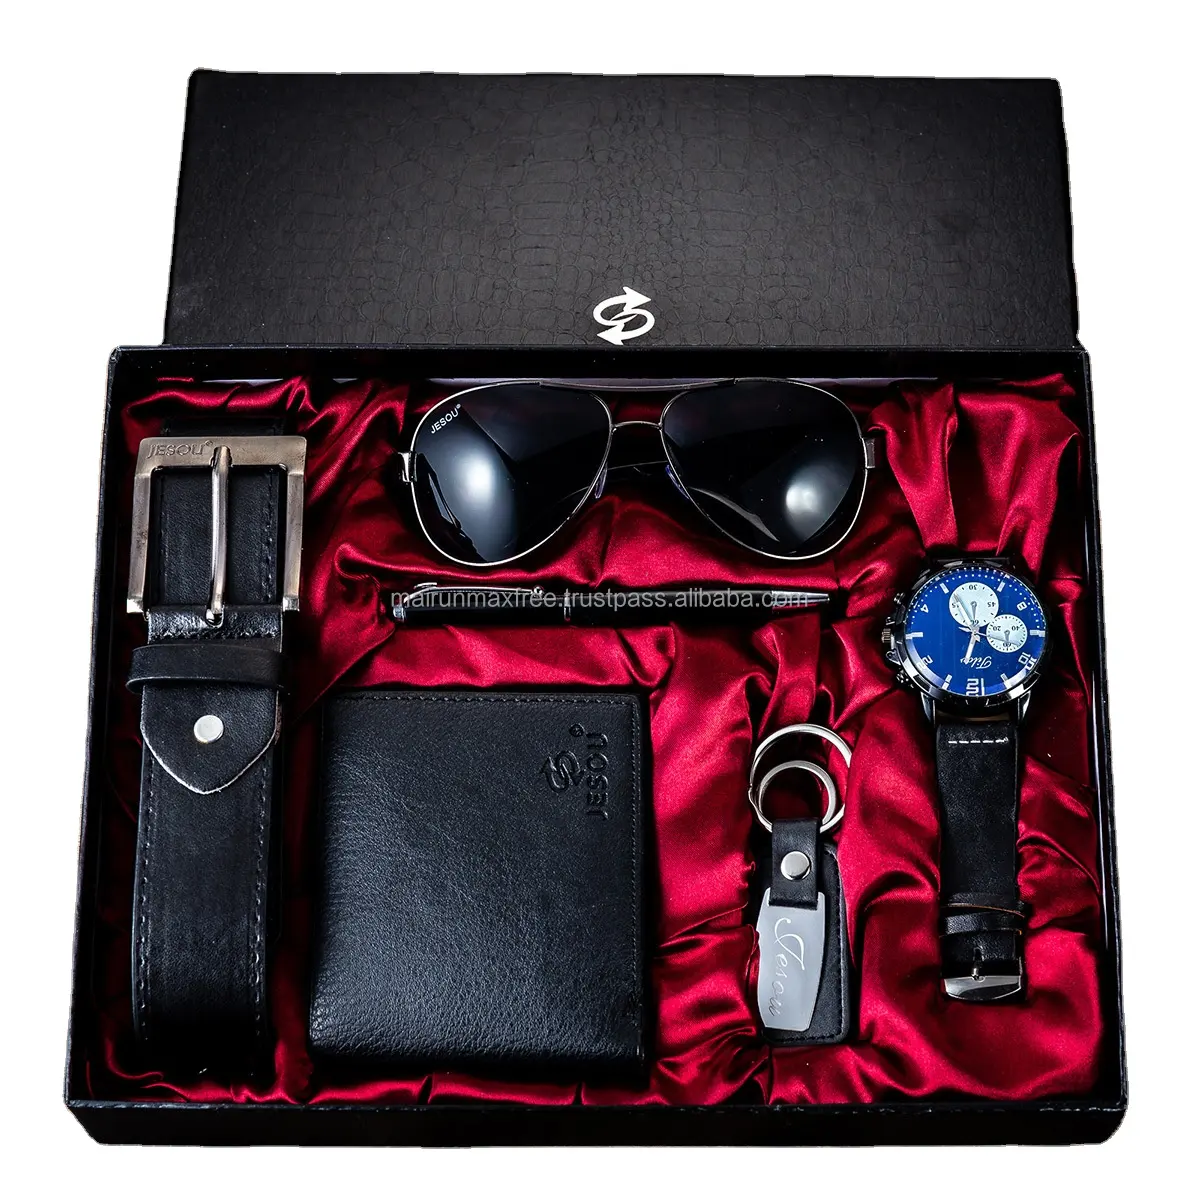 Quente! Conjuntos de presente de negócios masculino relógio + carteira + cinto + óculos de sol + caneta + chaveiro caixa de presente